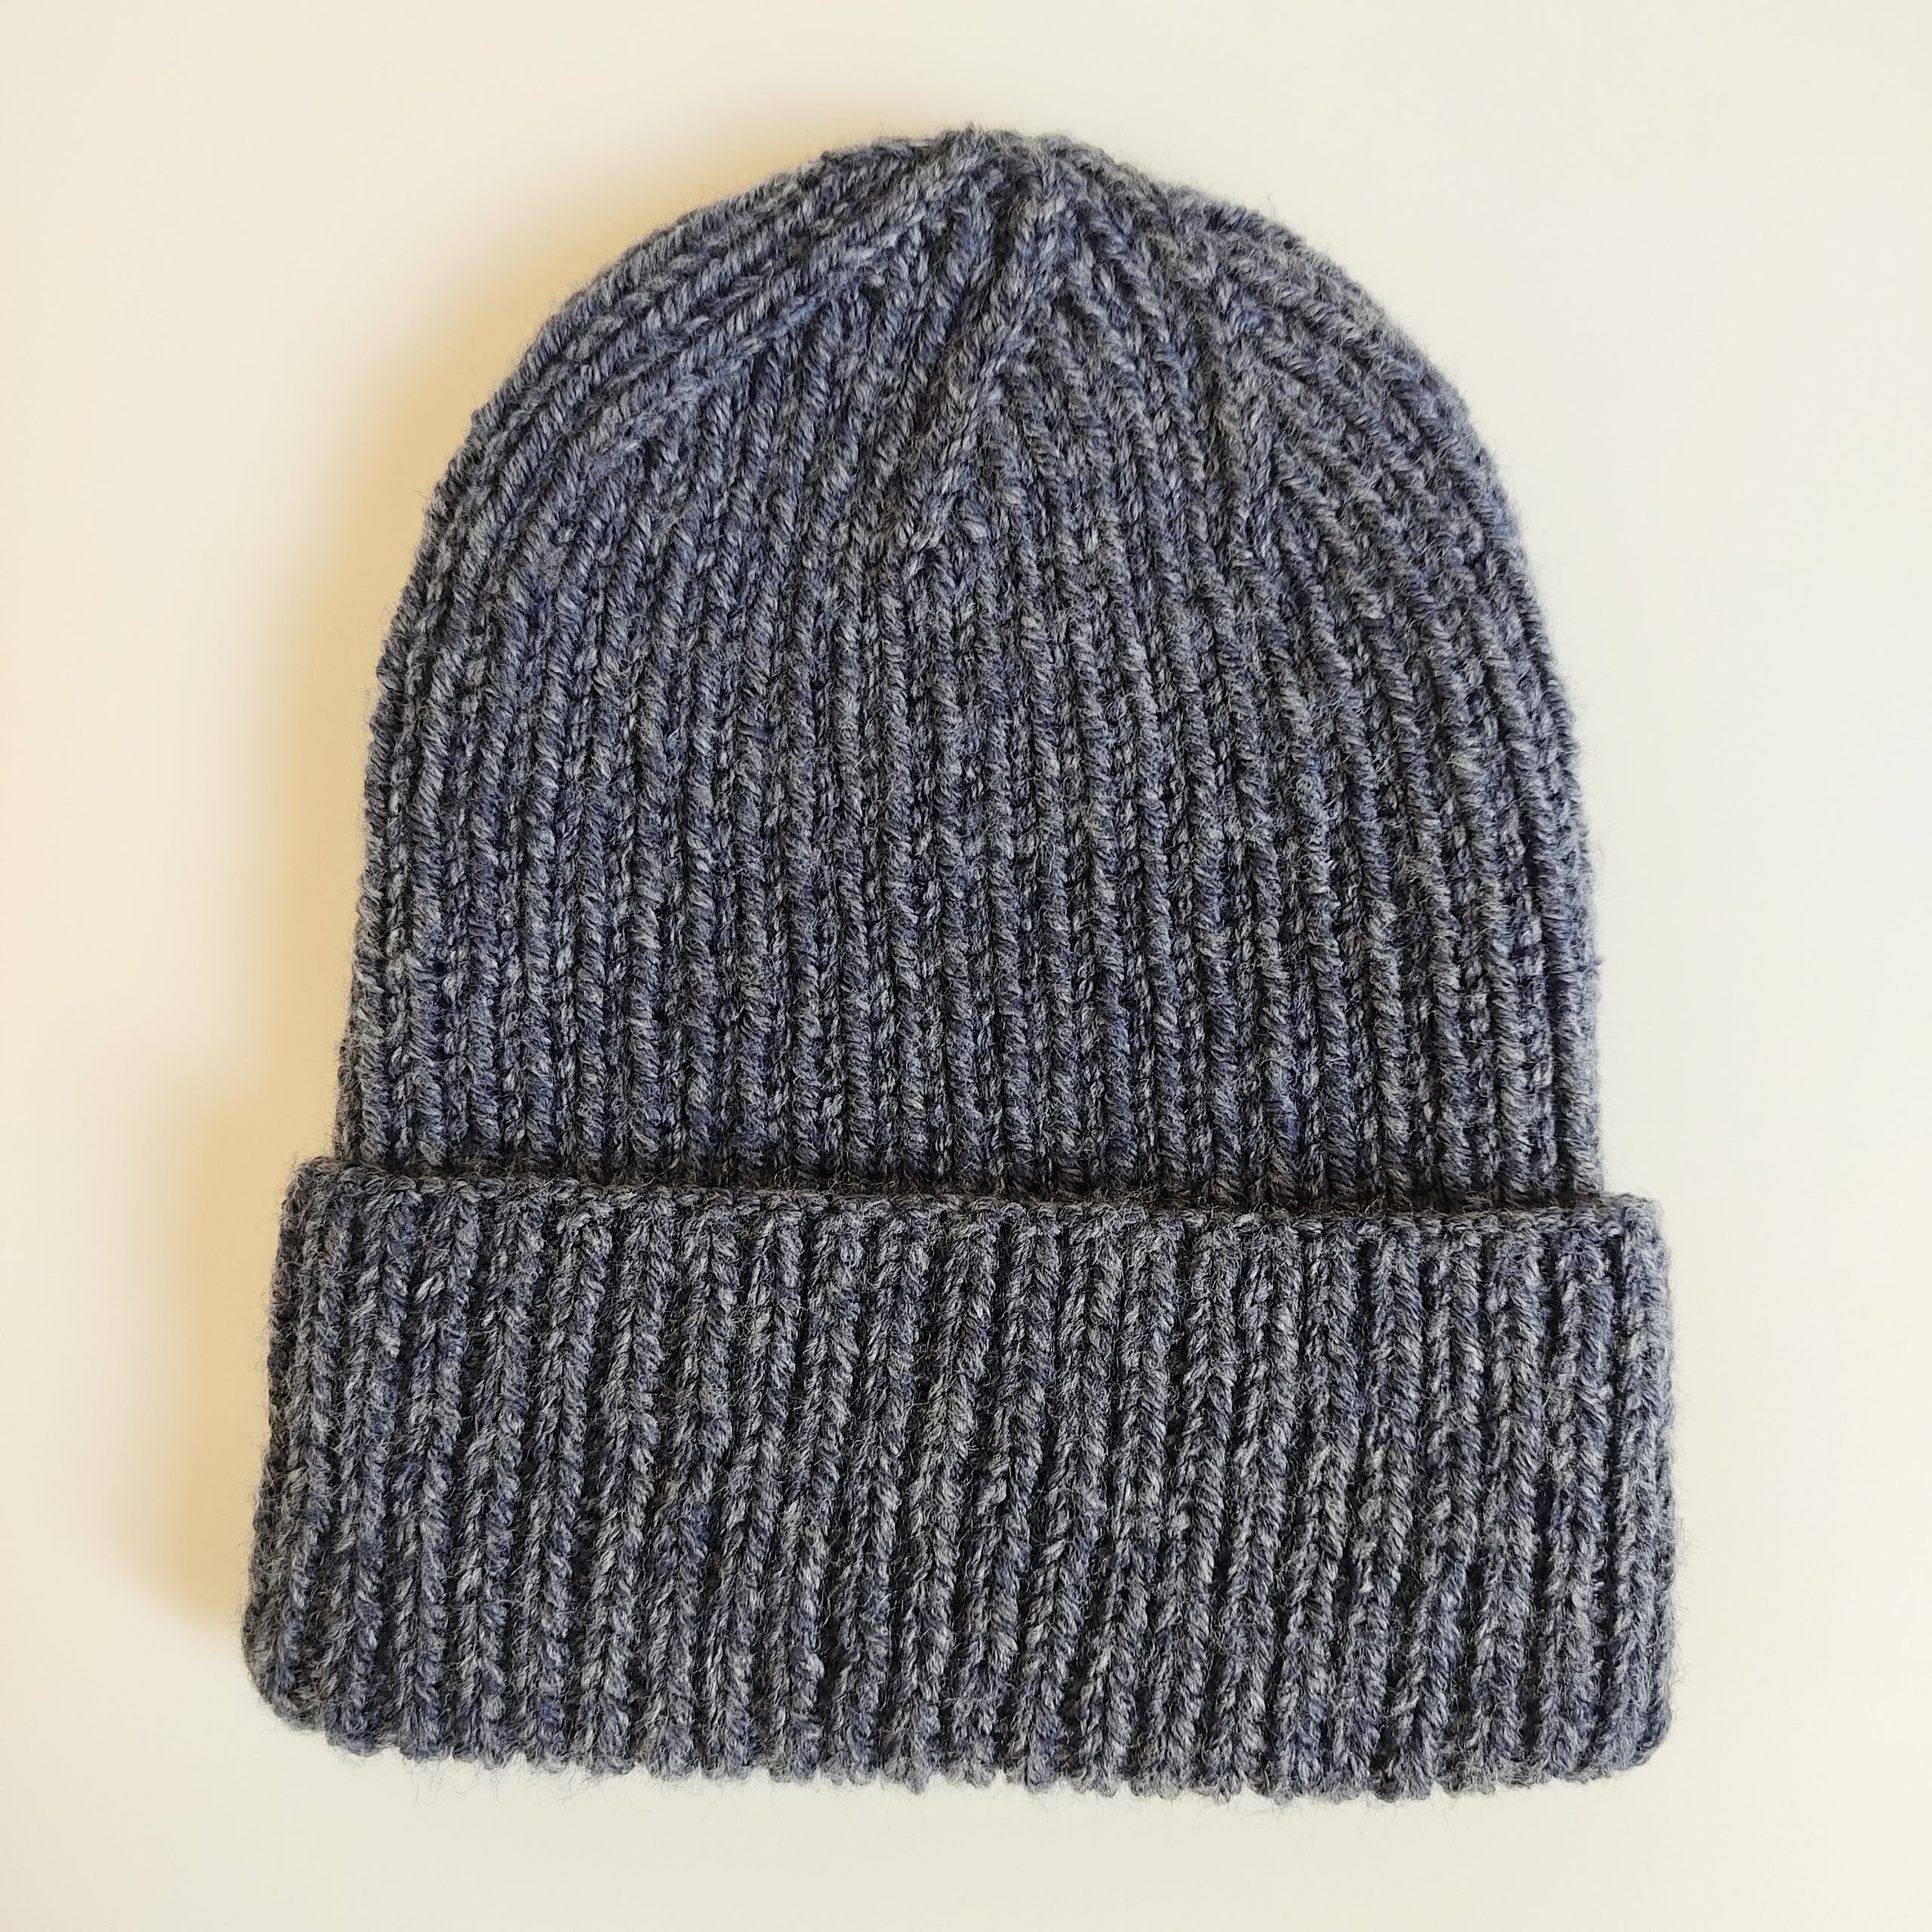 Navy grey knit hat